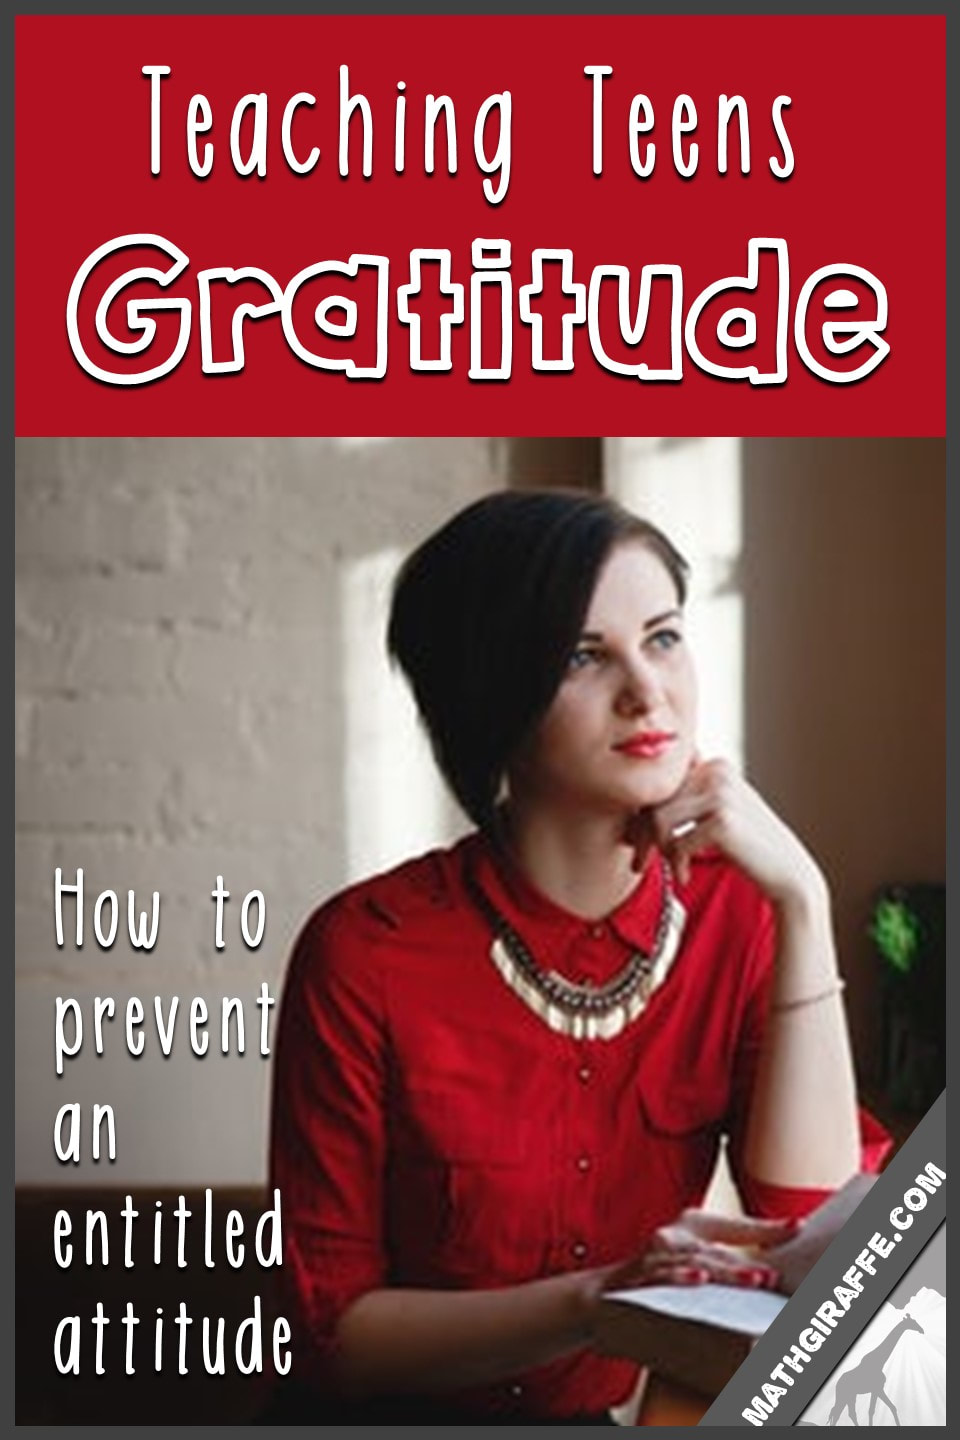 teaching gratitude - attitudes & entitlement in the classroom